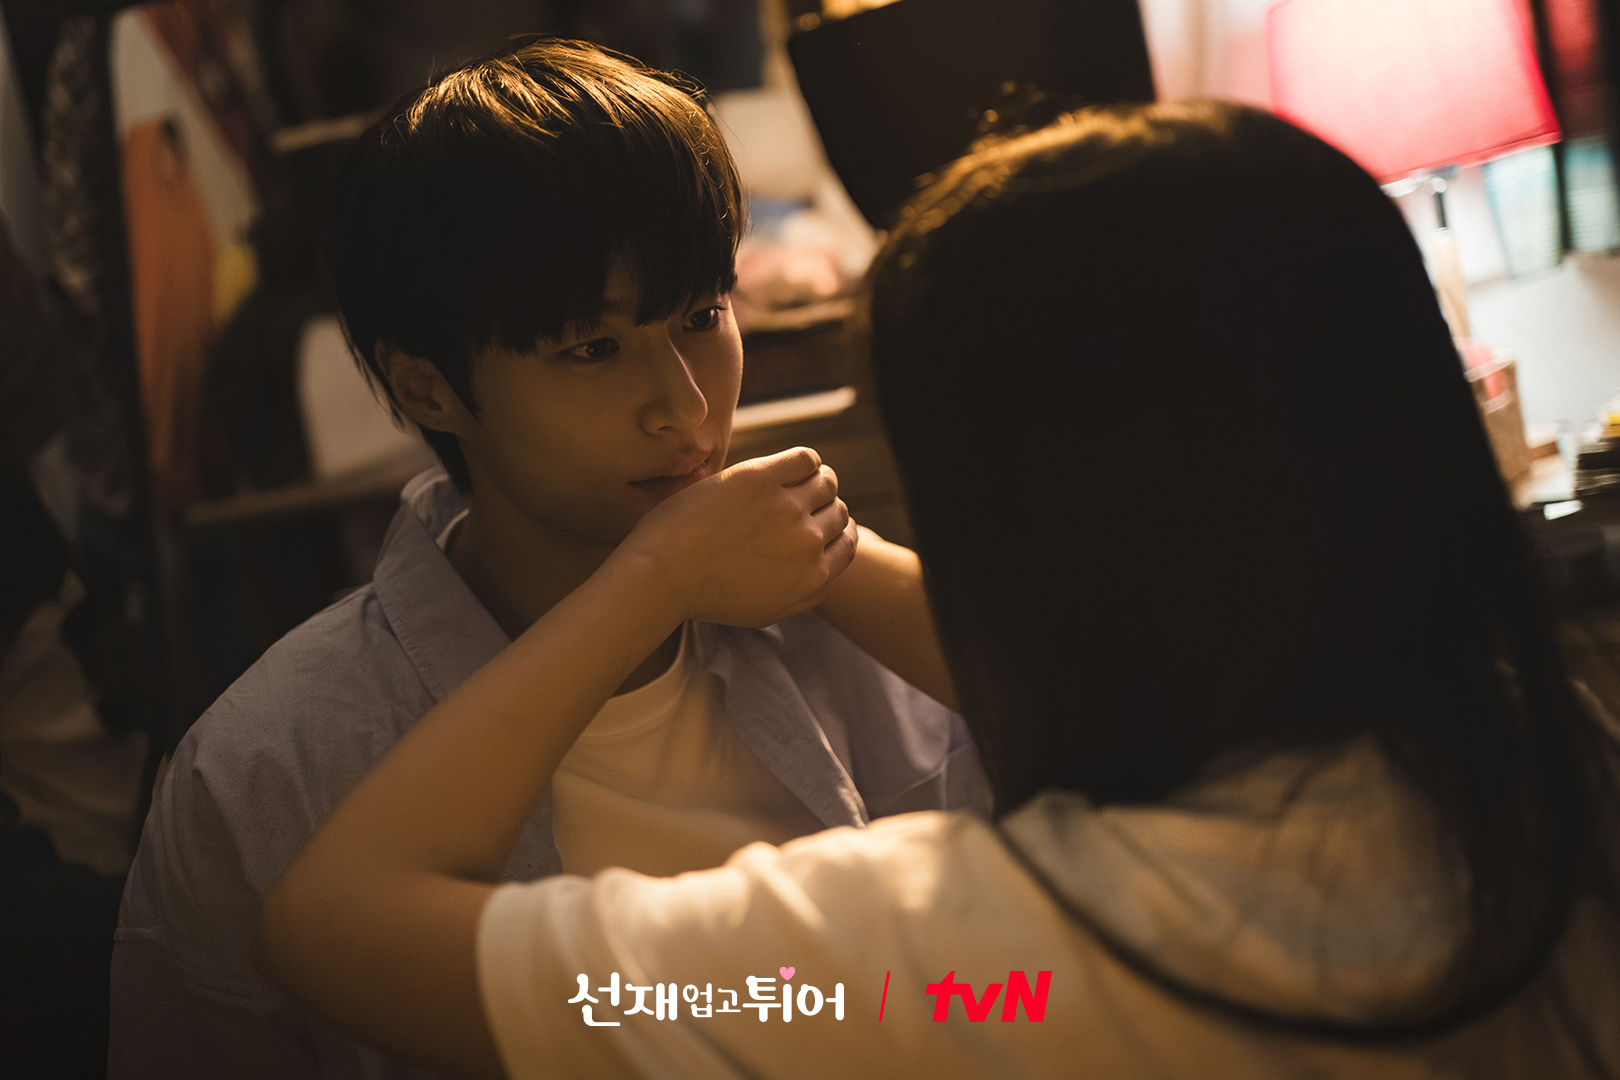 Byeon Woo Seok And Kim Hye Yoon's Close Proximity Ignites Romantic Tension In 